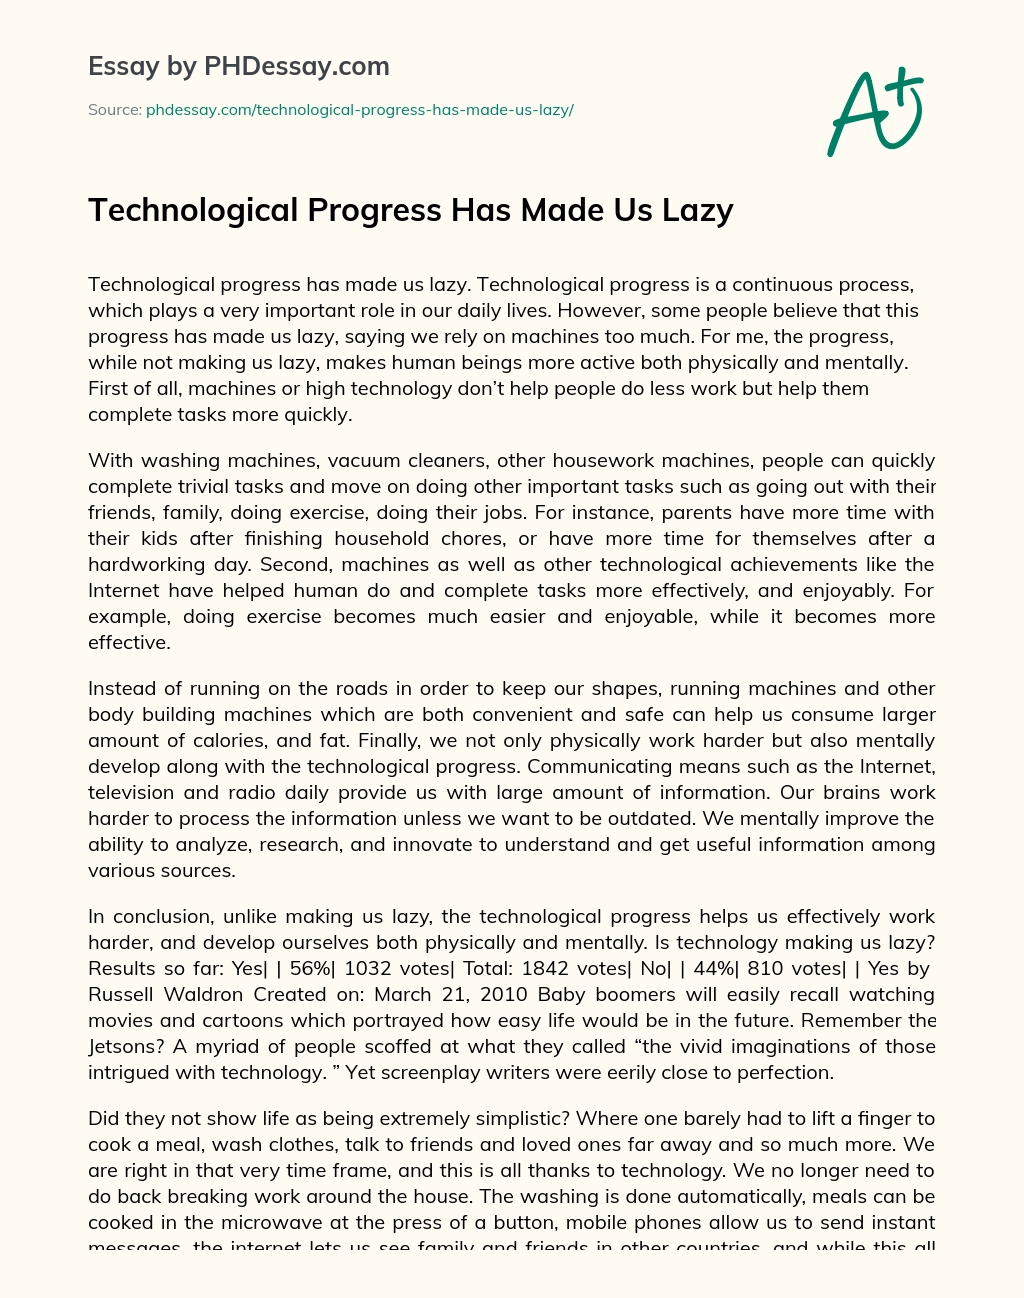 Technological Progress Has Made Us Lazy essay